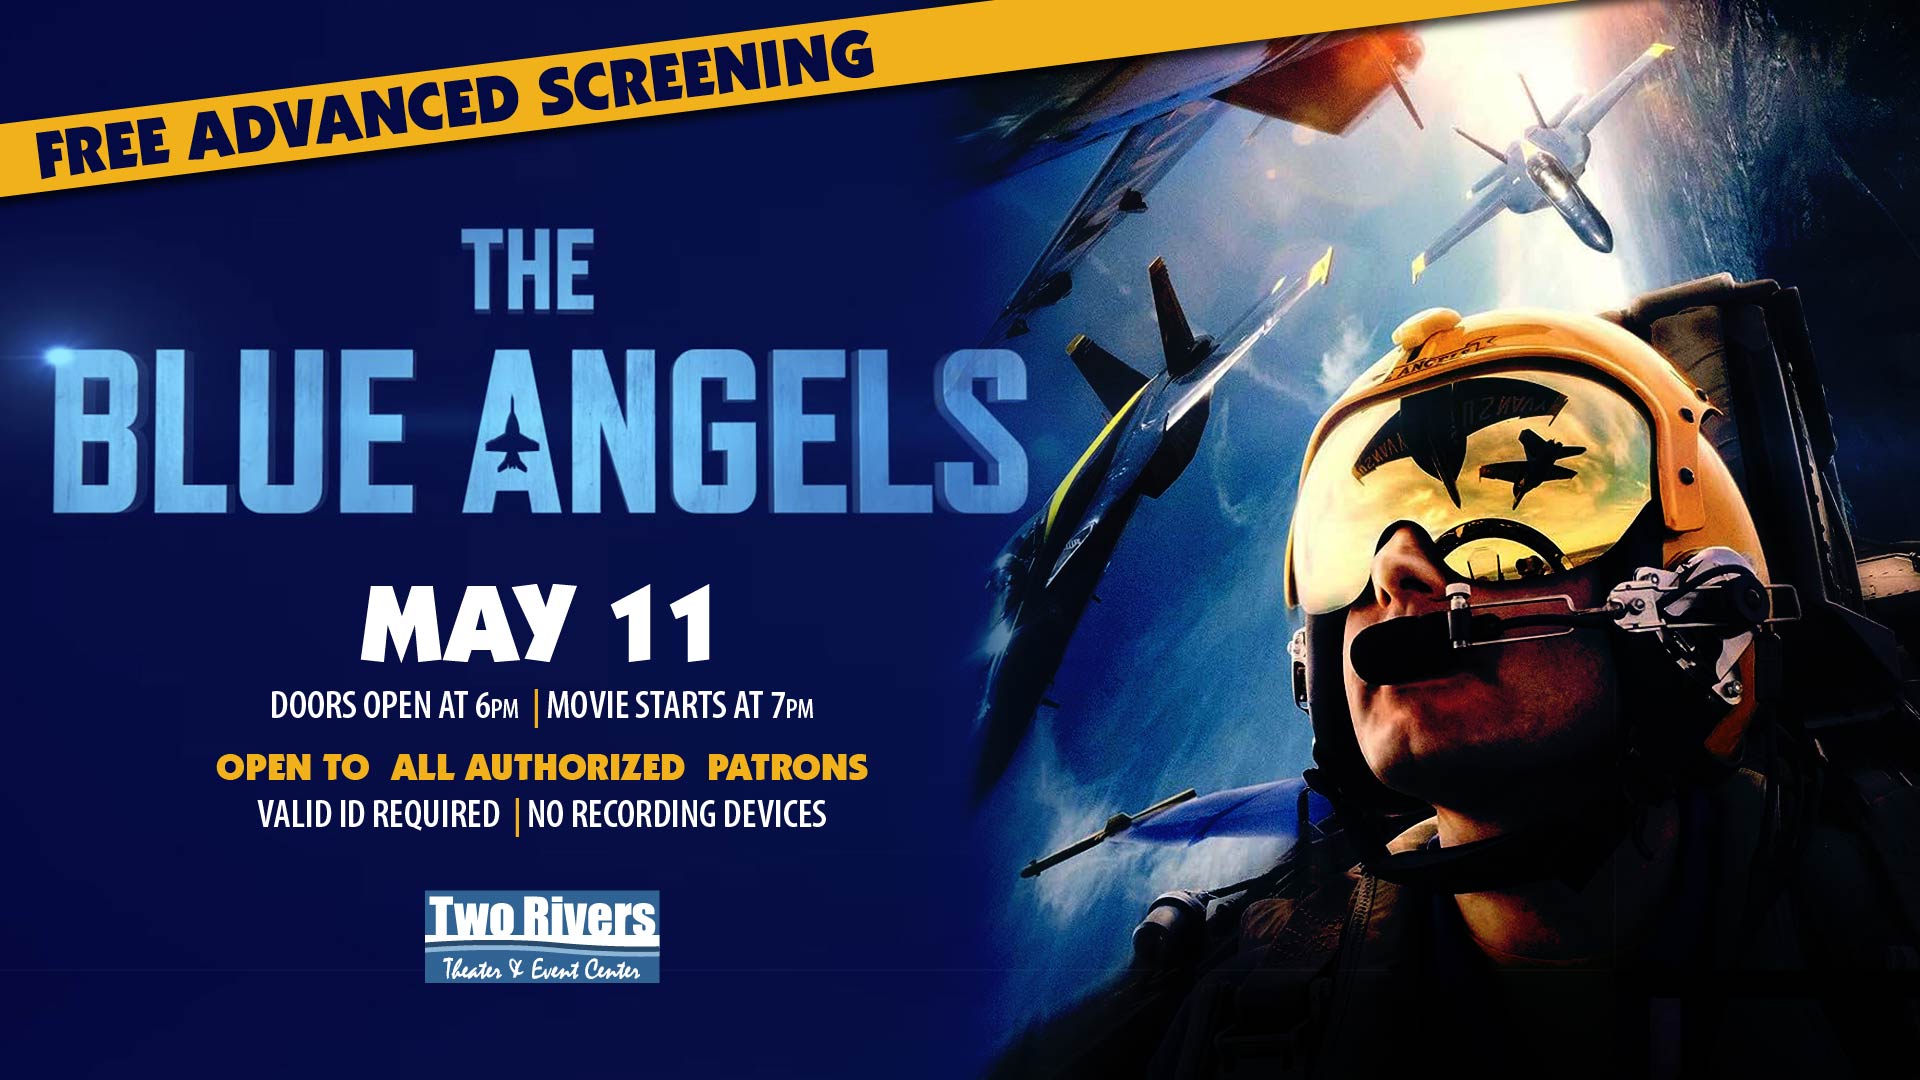 Free Advanced Screening: The Blue Angels